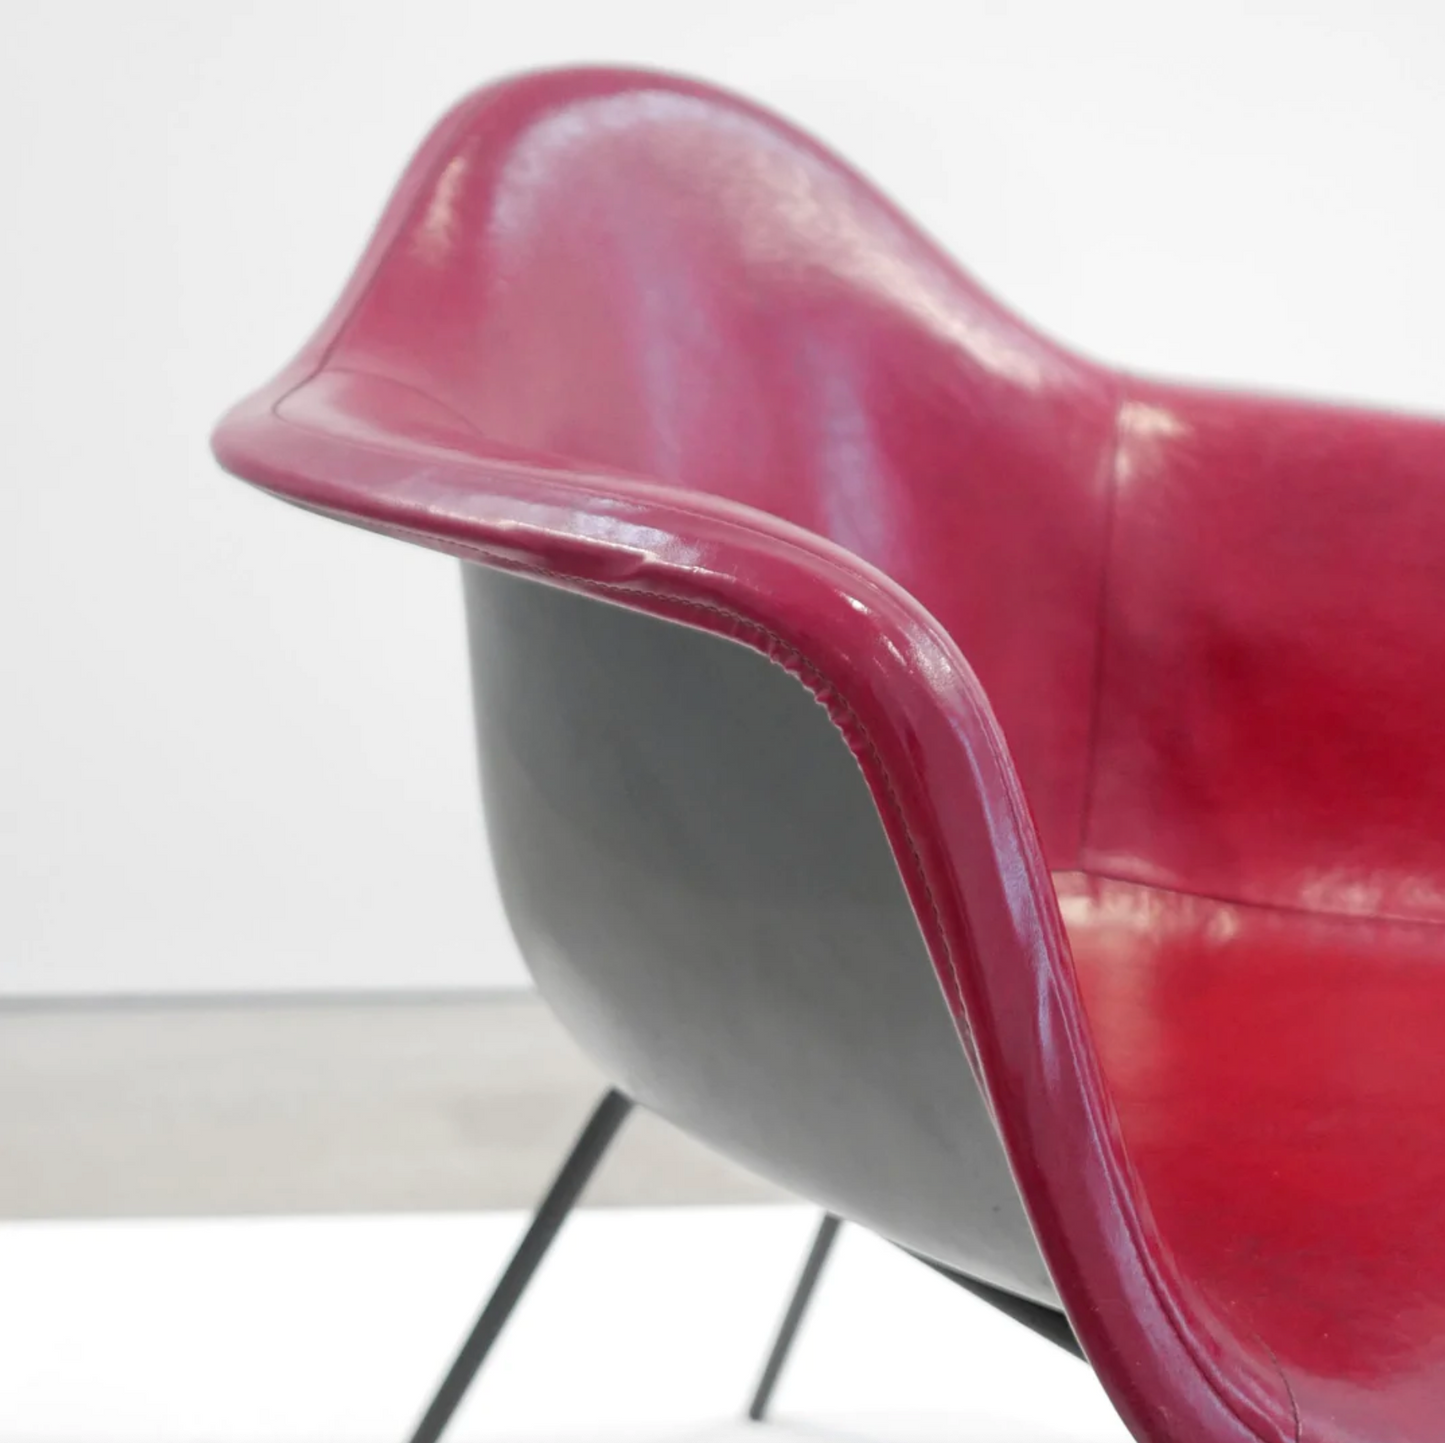 Ray & Charles Eames 'Dax Chair'